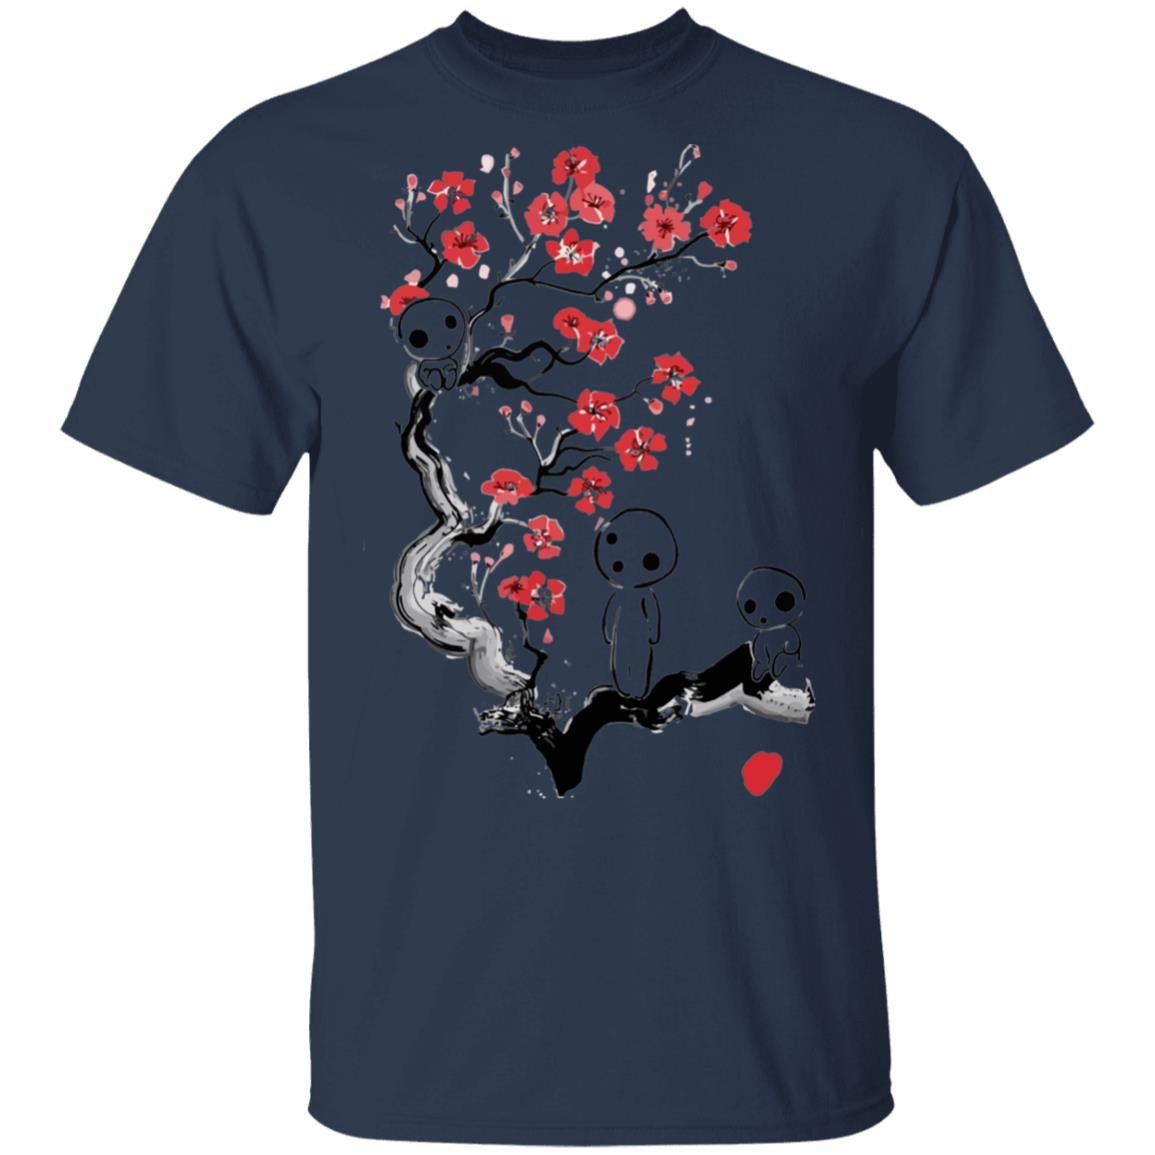 Princess Mononoke – Tree Spirits on the Cherry Blossom T Shirt Unisex